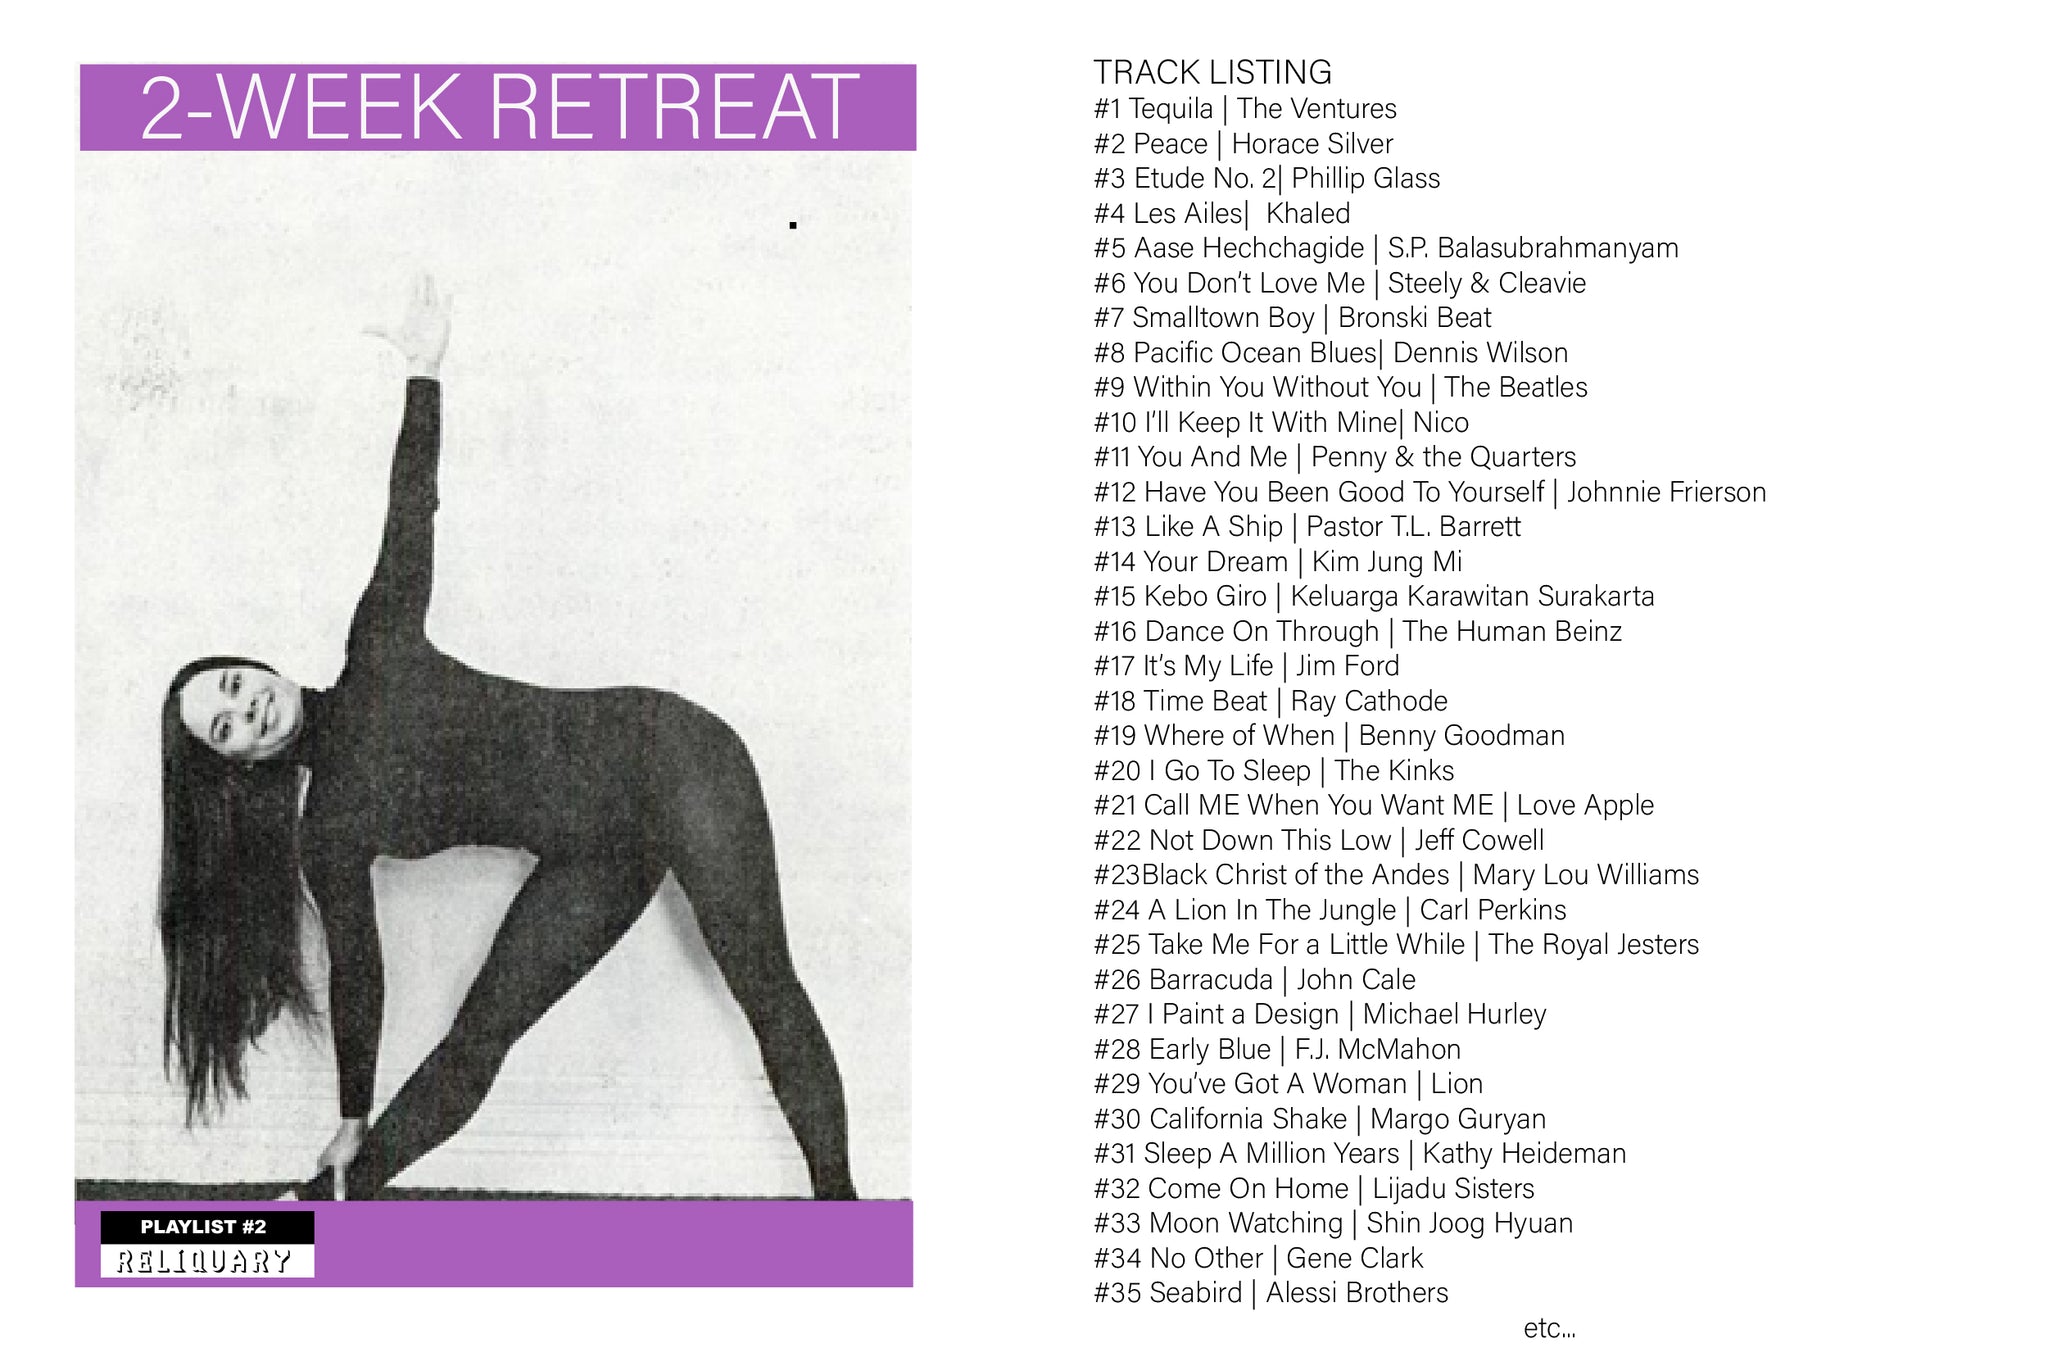 Reliquary Playlist #2 | 2-Week Retreat